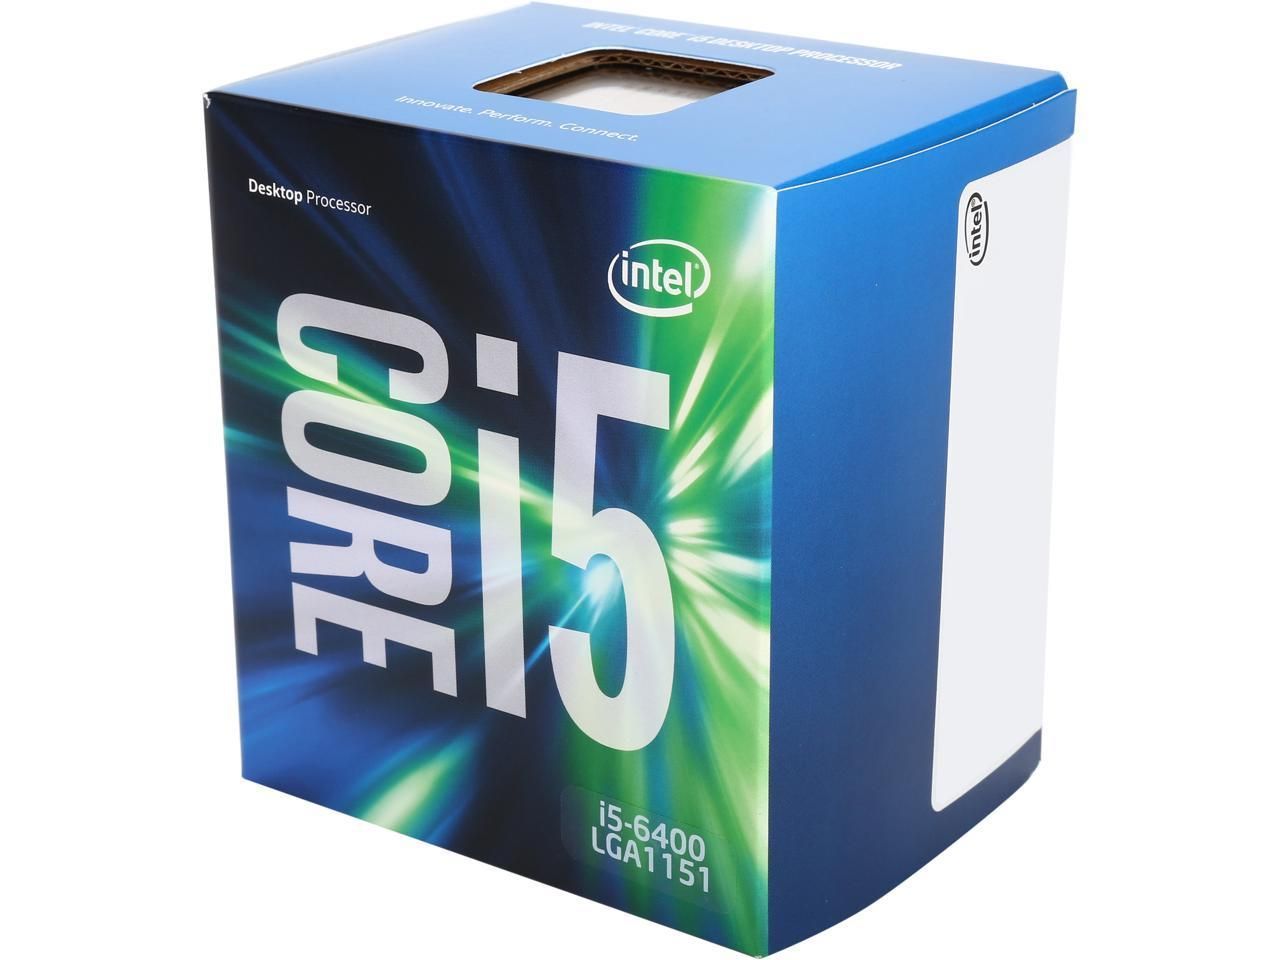 Интел 7100. Intel Core i5-6400 (Box). Intel Core i5-6400 Skylake OEM. Intel Core i5-7500. Intel Core i3 7100 CPU.